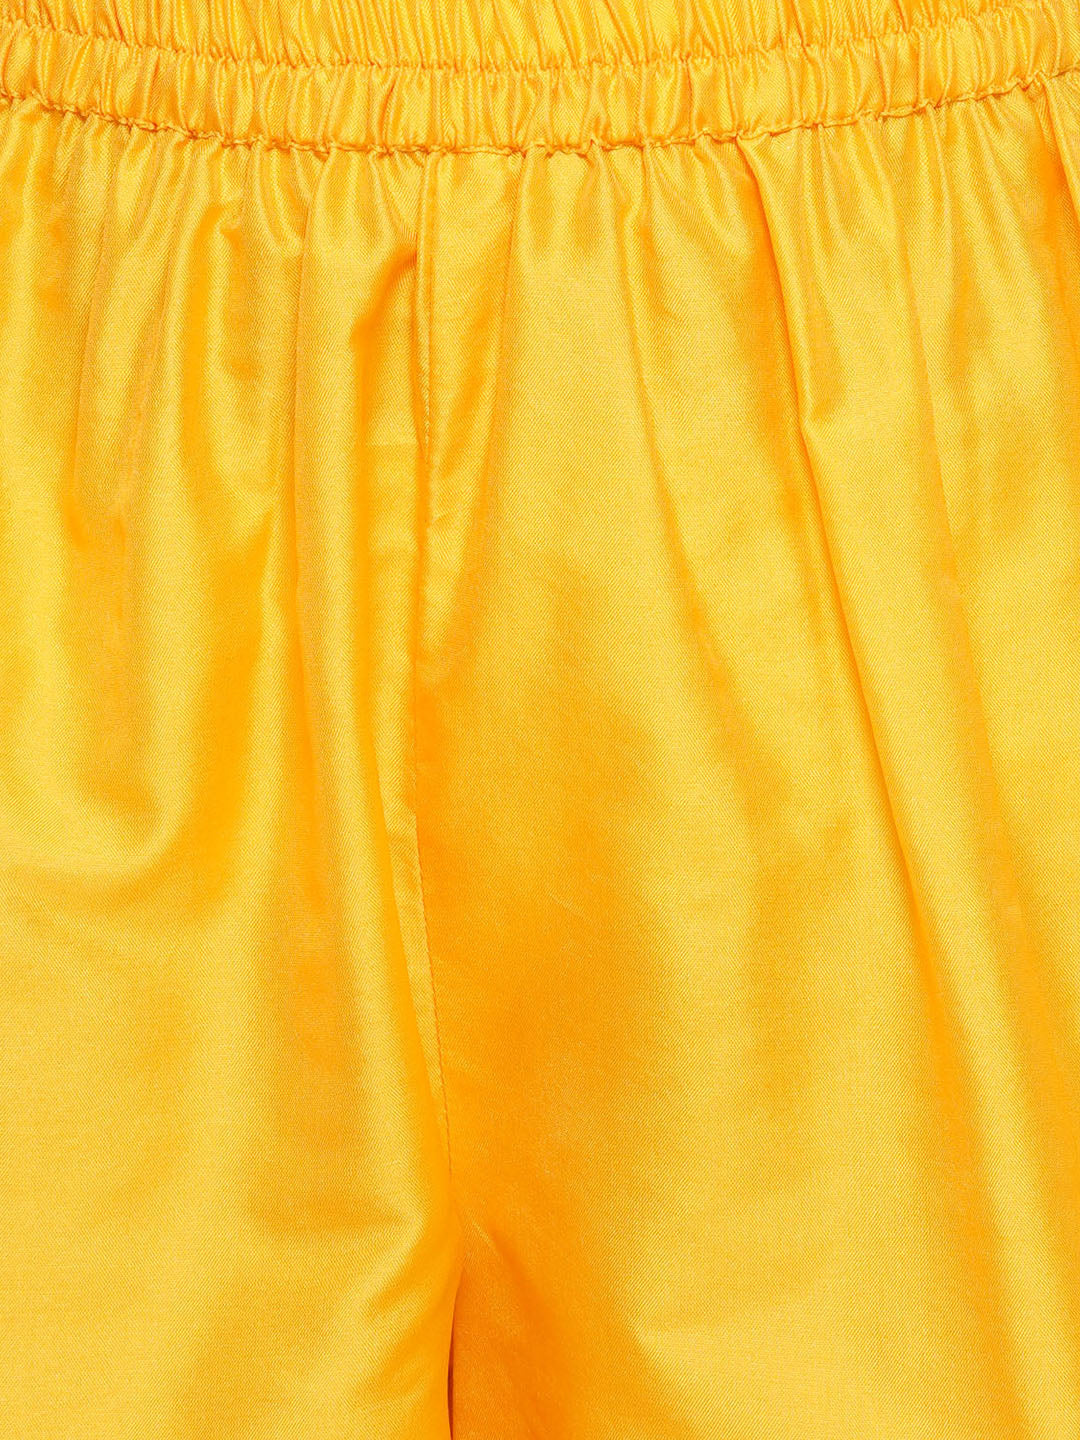 Girl's Yellow Embroidered Angrakha Kurta With Trousers & Dupatta - Bitiya By Bhama